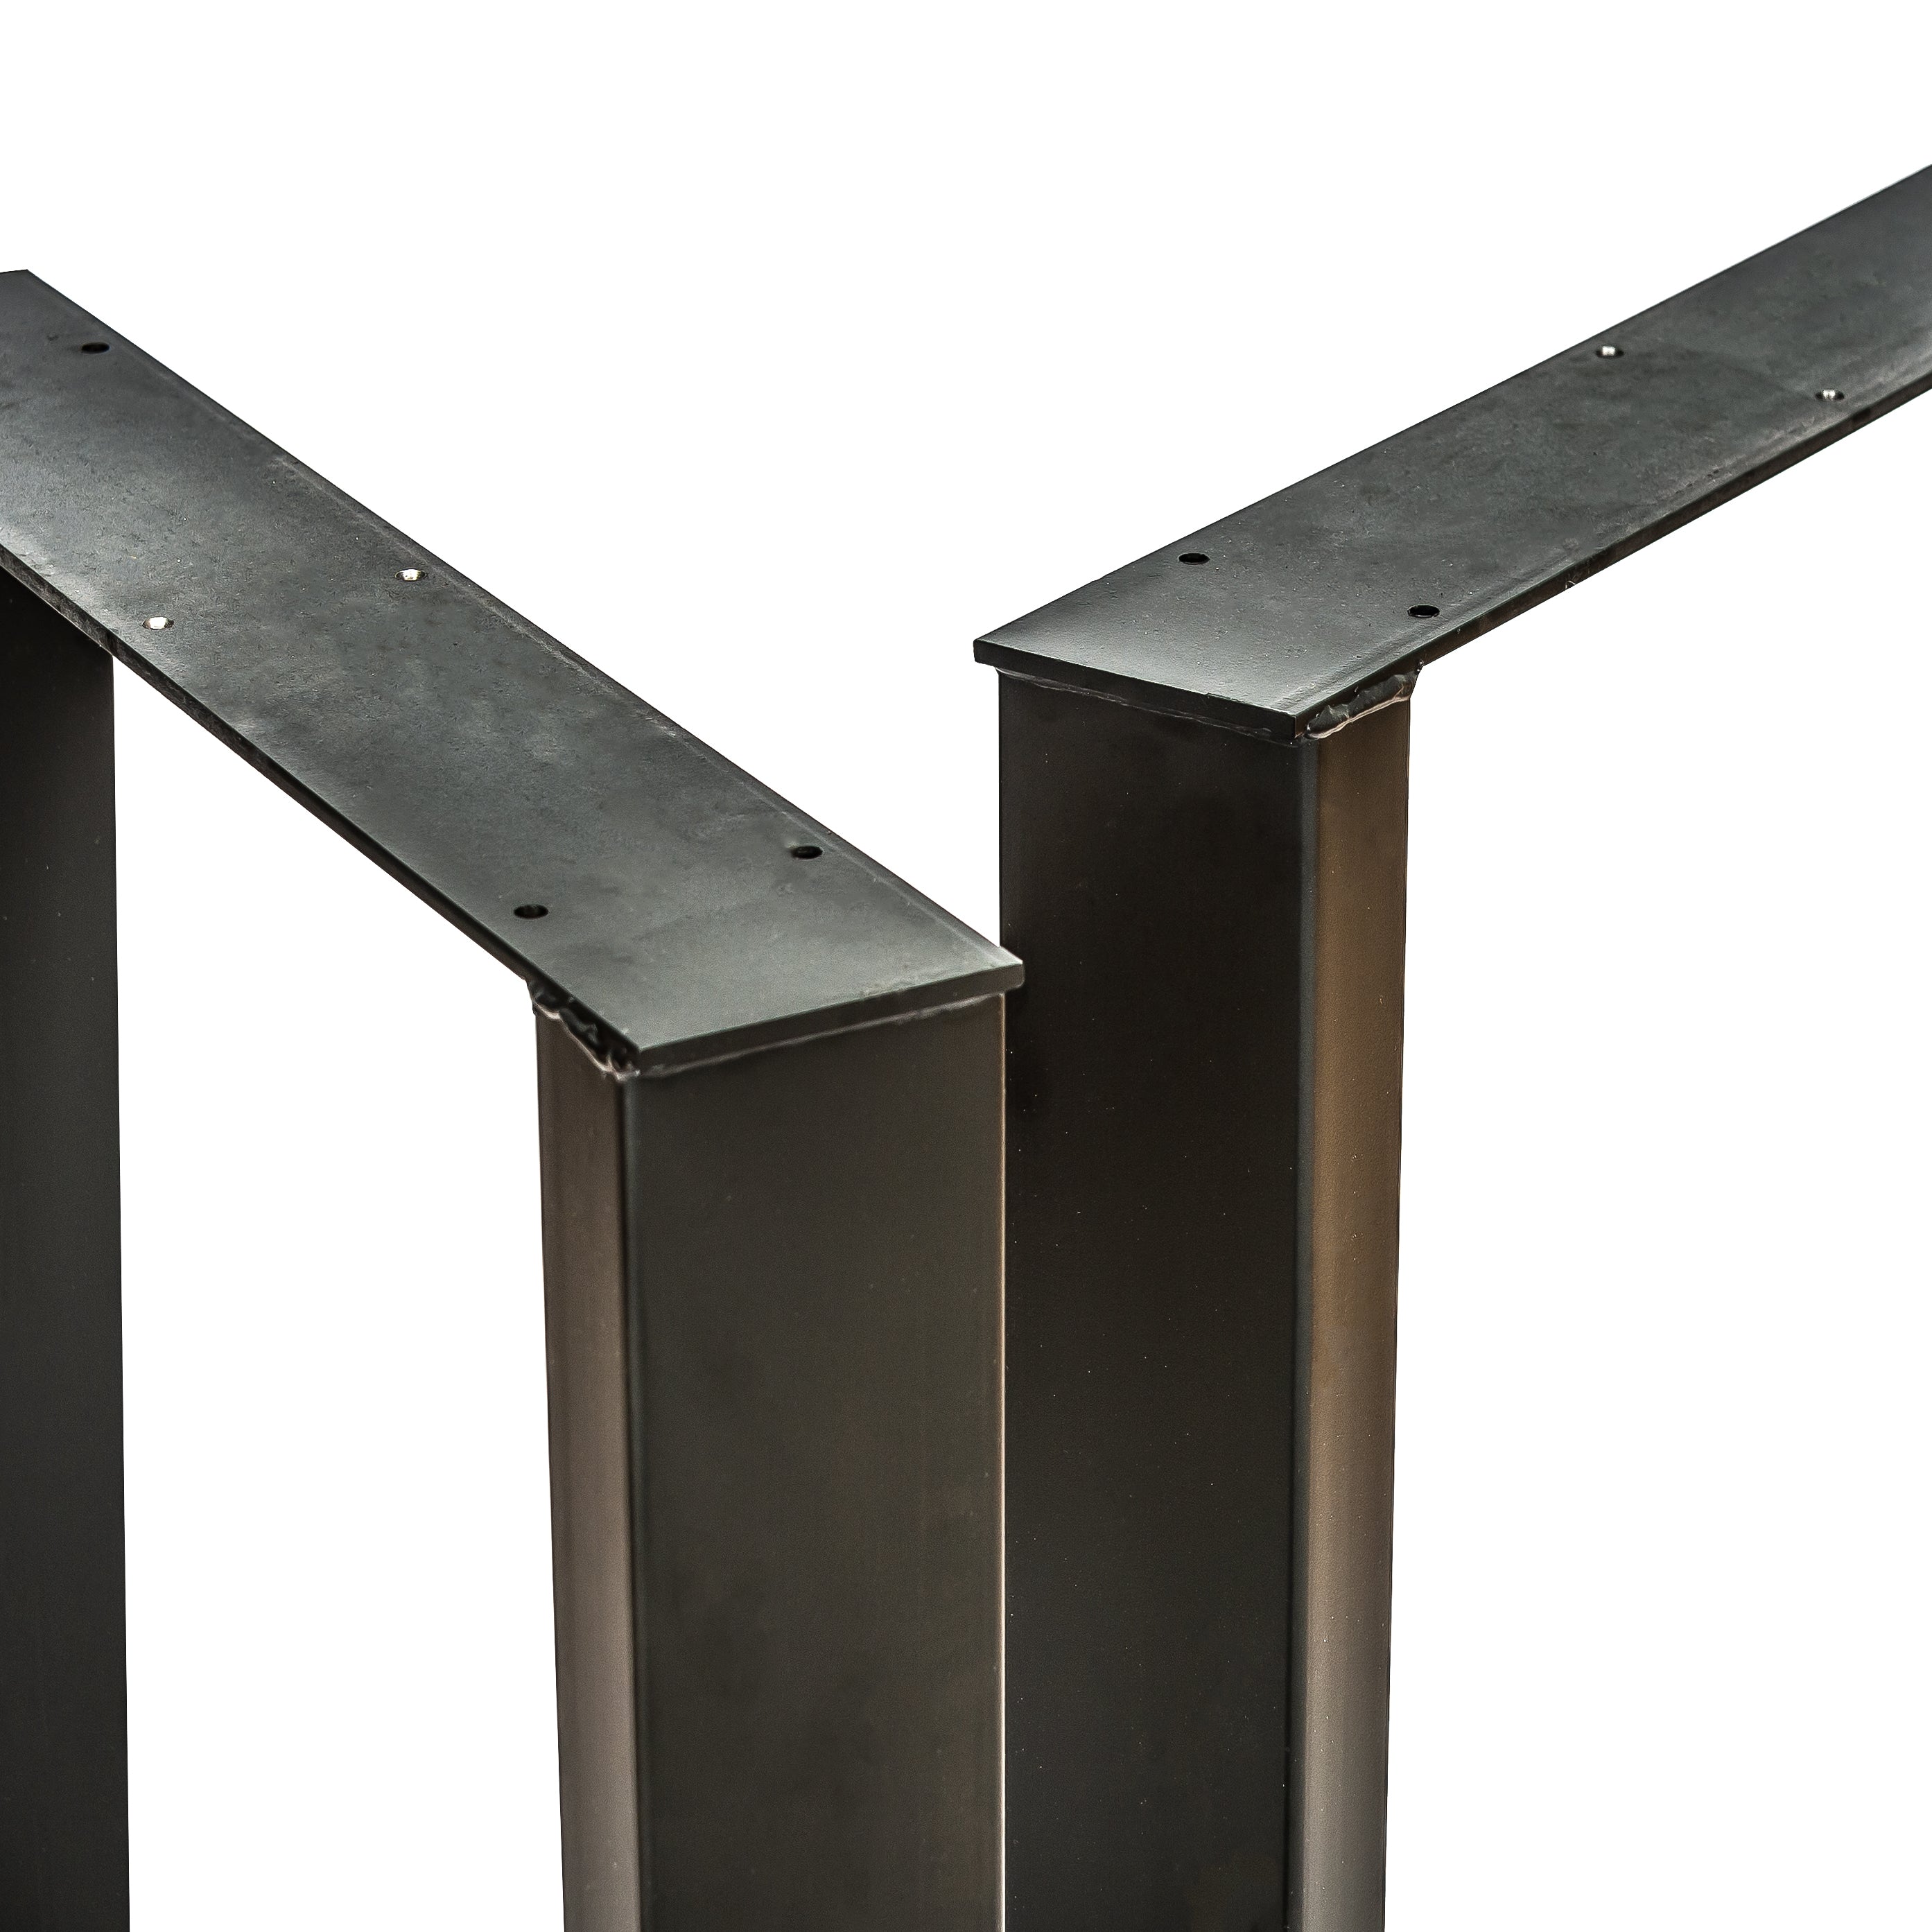 2 x 4 Square Metal Table Legs - Set of 2